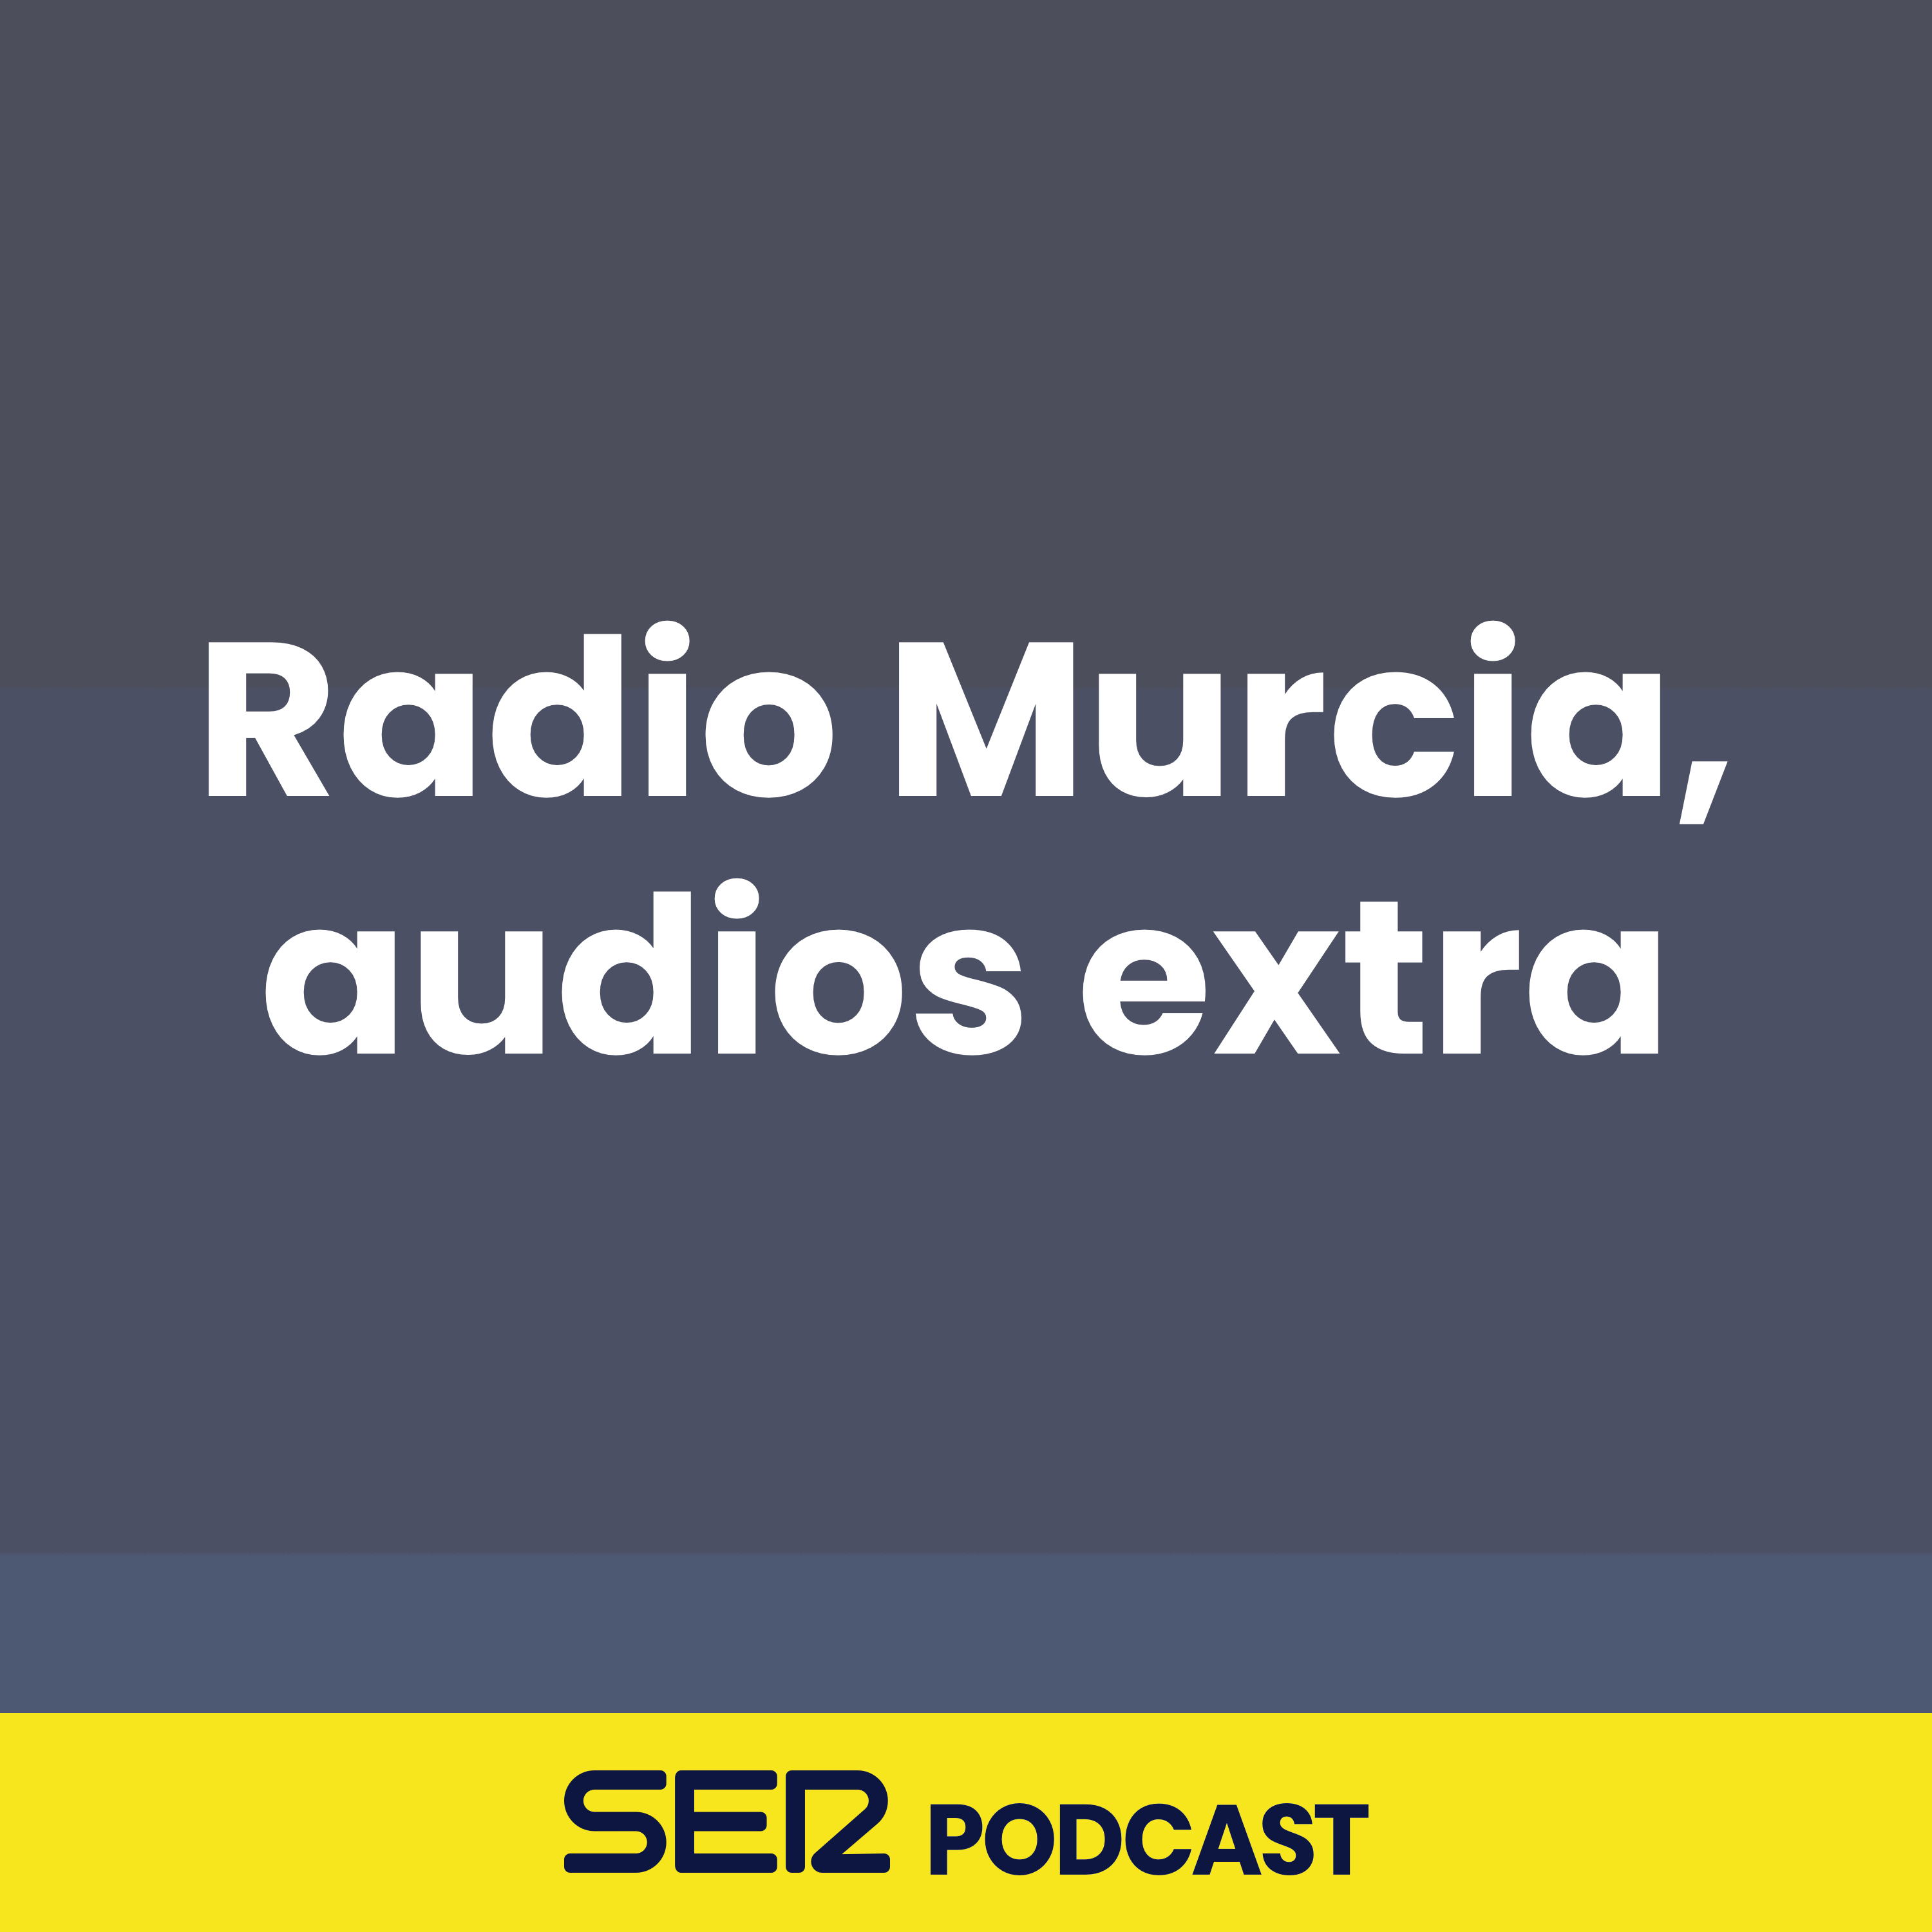 Radio Murcia, audios extra